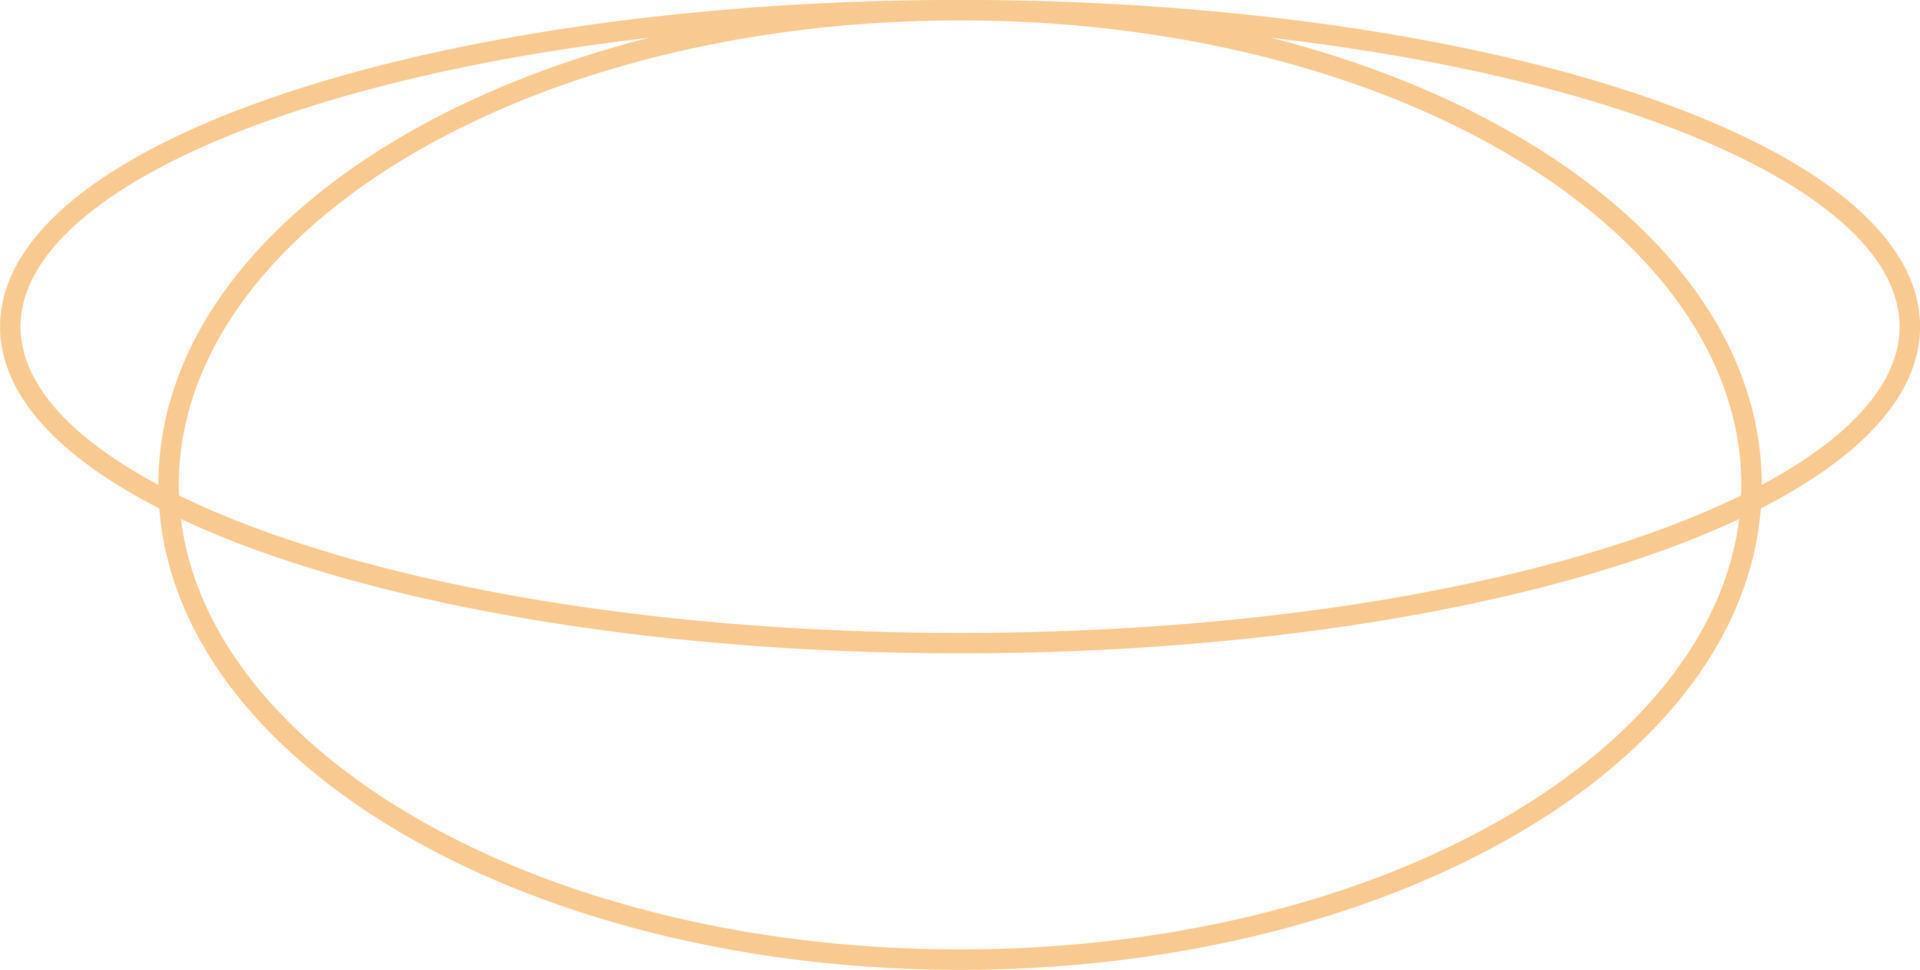 minimales ovales umrissdesign vektor